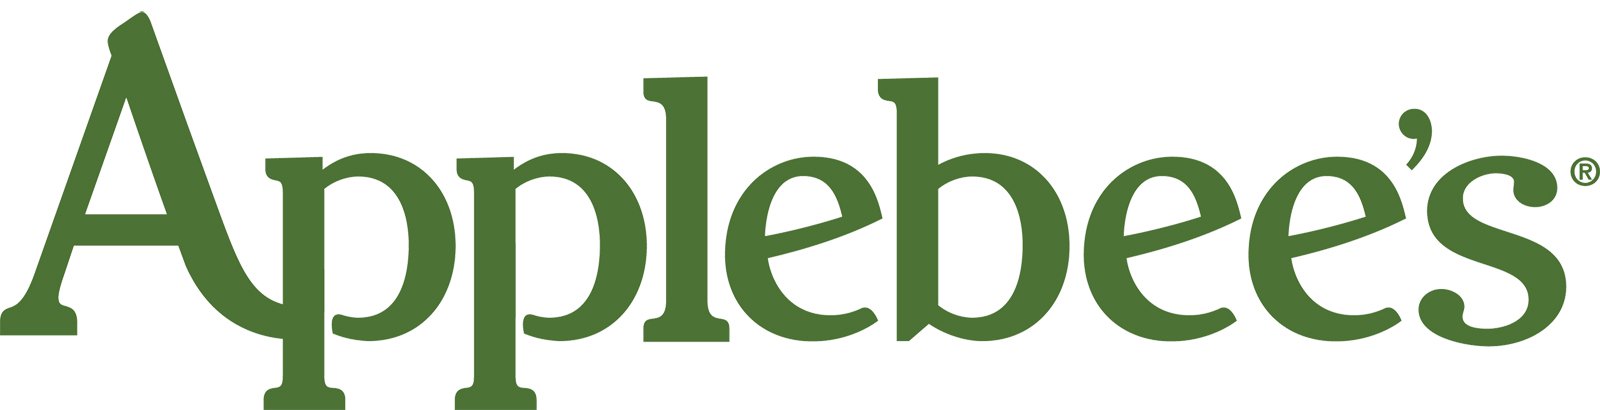 1000Logos Applebee's Font